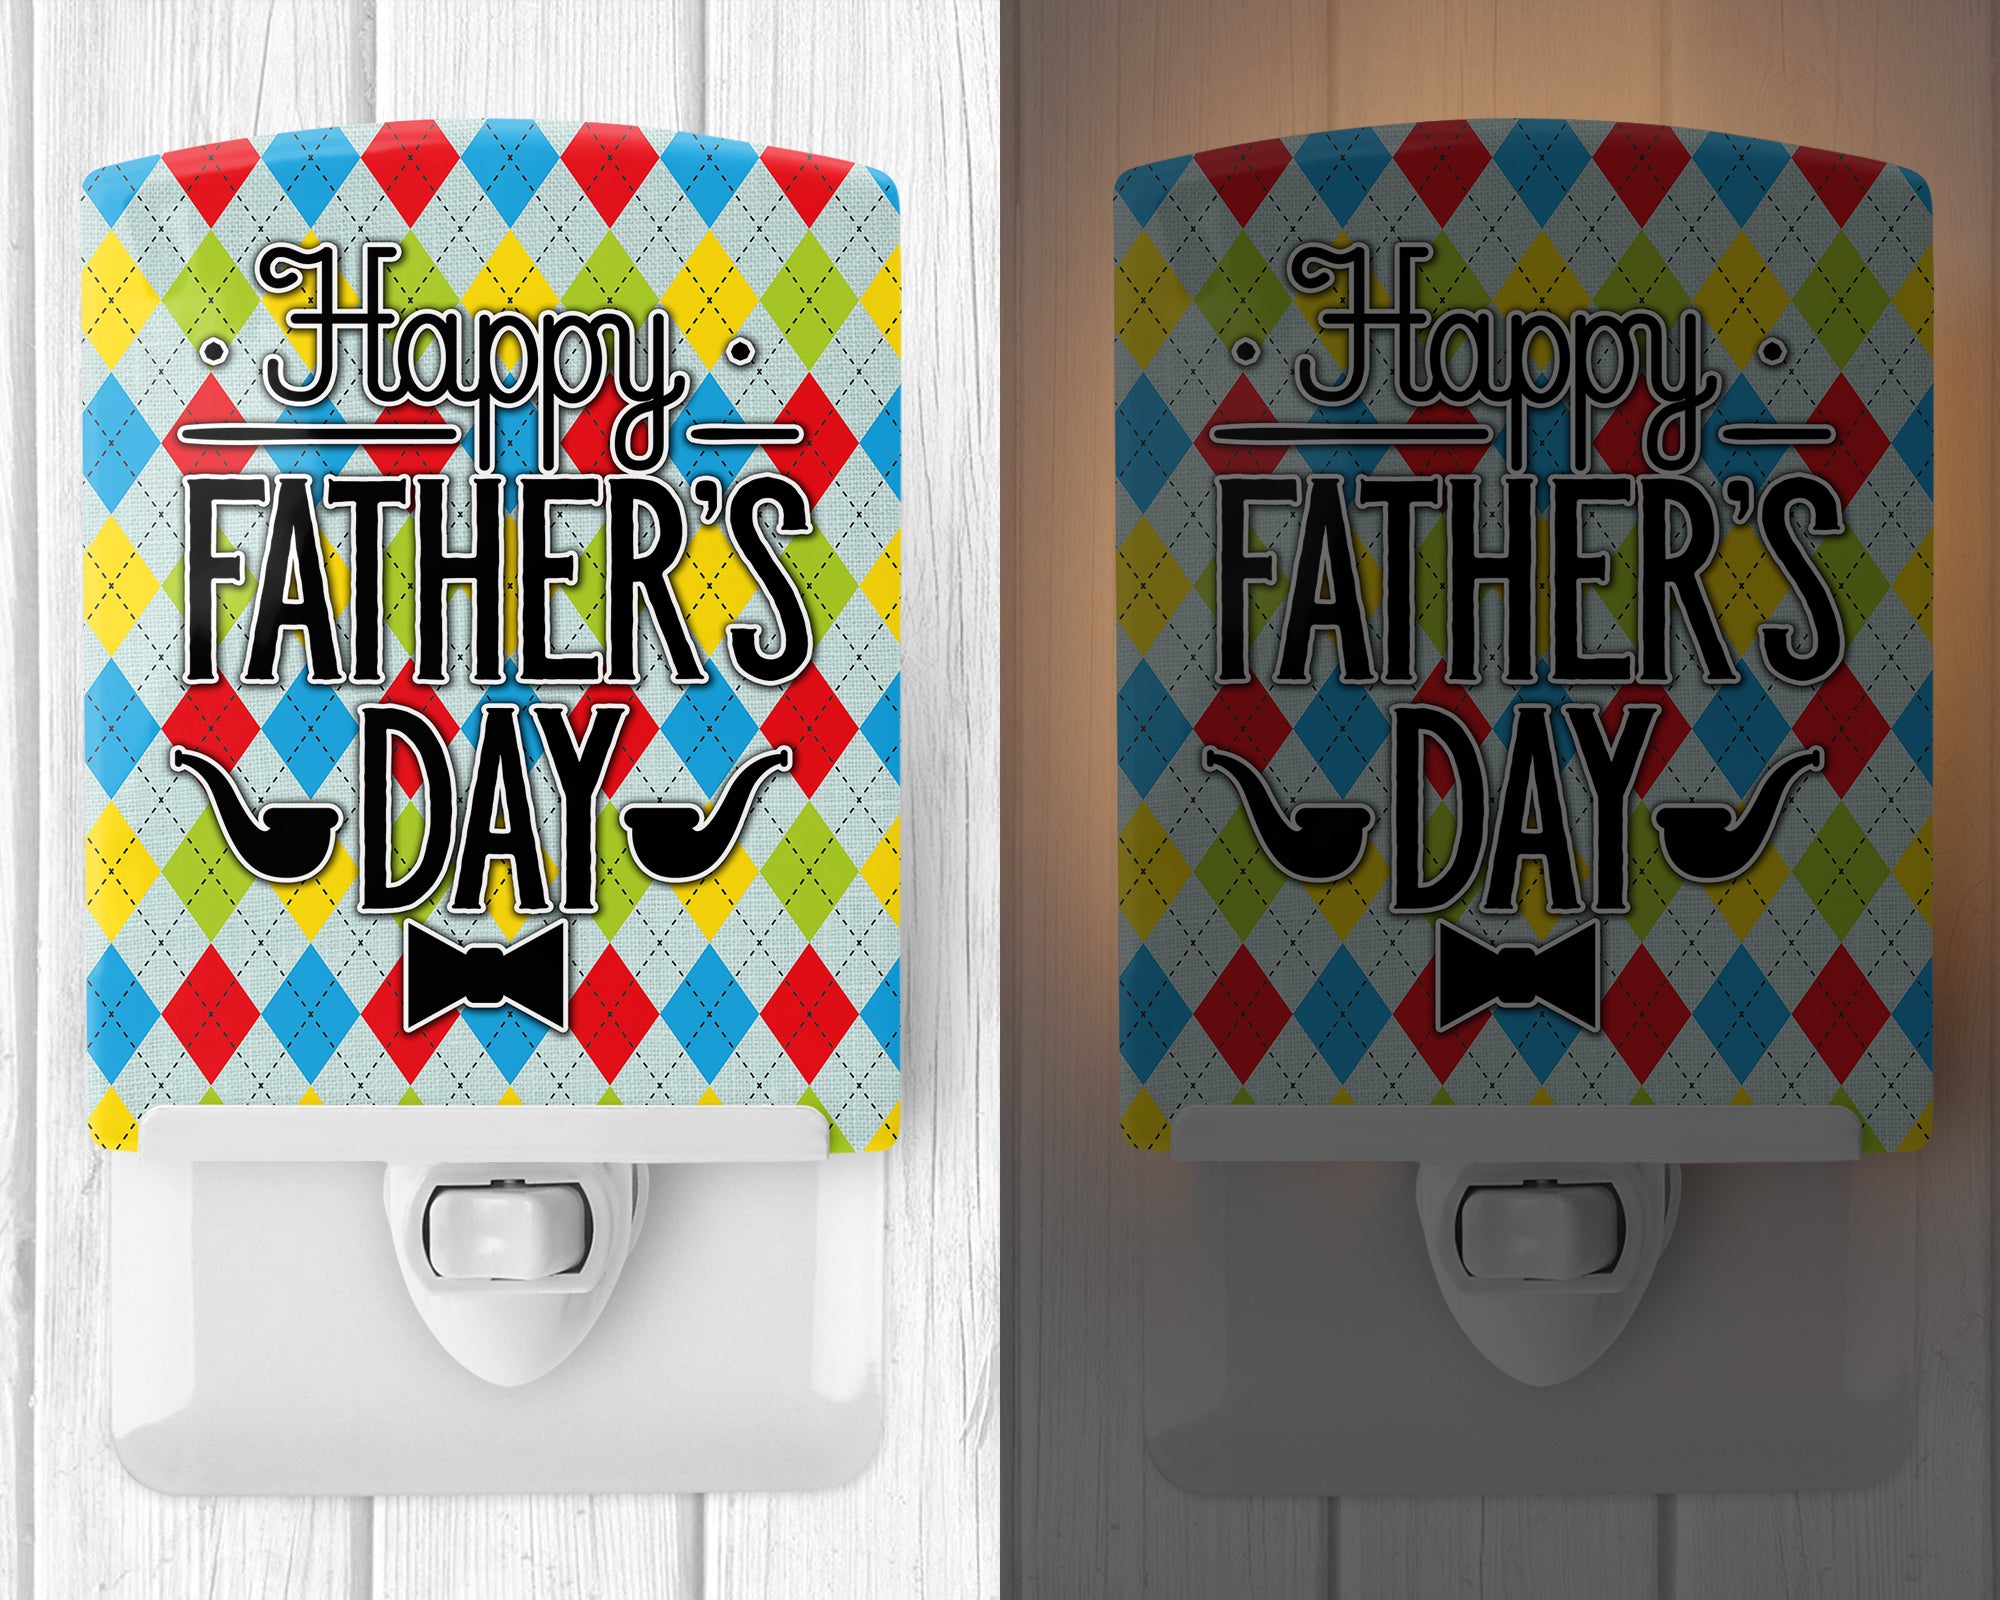 Happy Father's Day Argyle Ceramic Night Light BB5439CNL - the-store.com